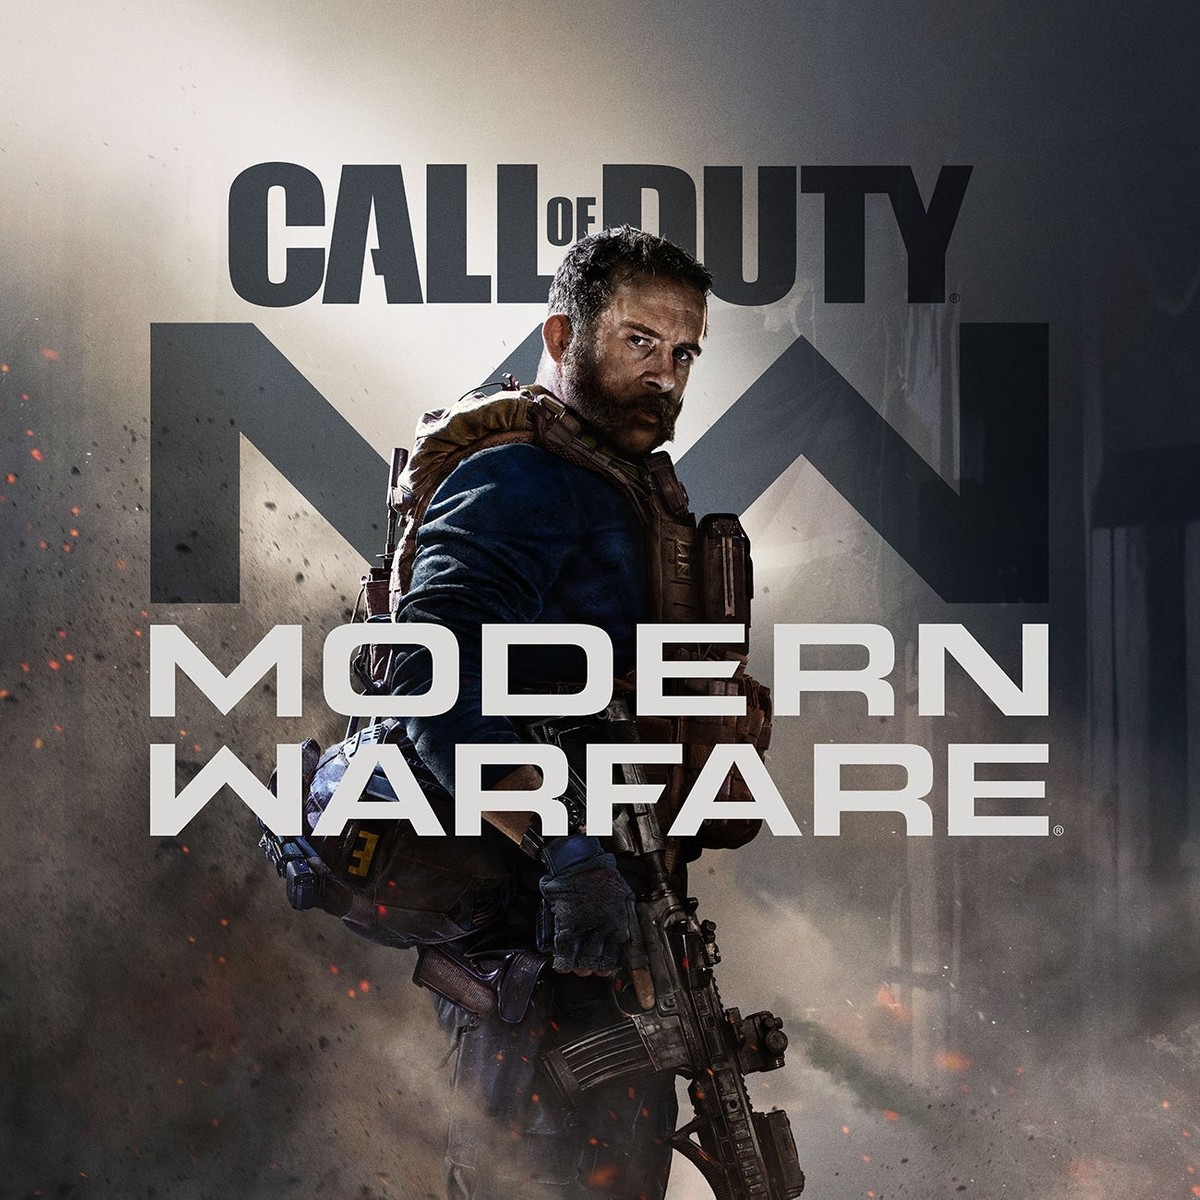 Requisitos mínimos para rodar Call of Duty: Modern Warfare no PC